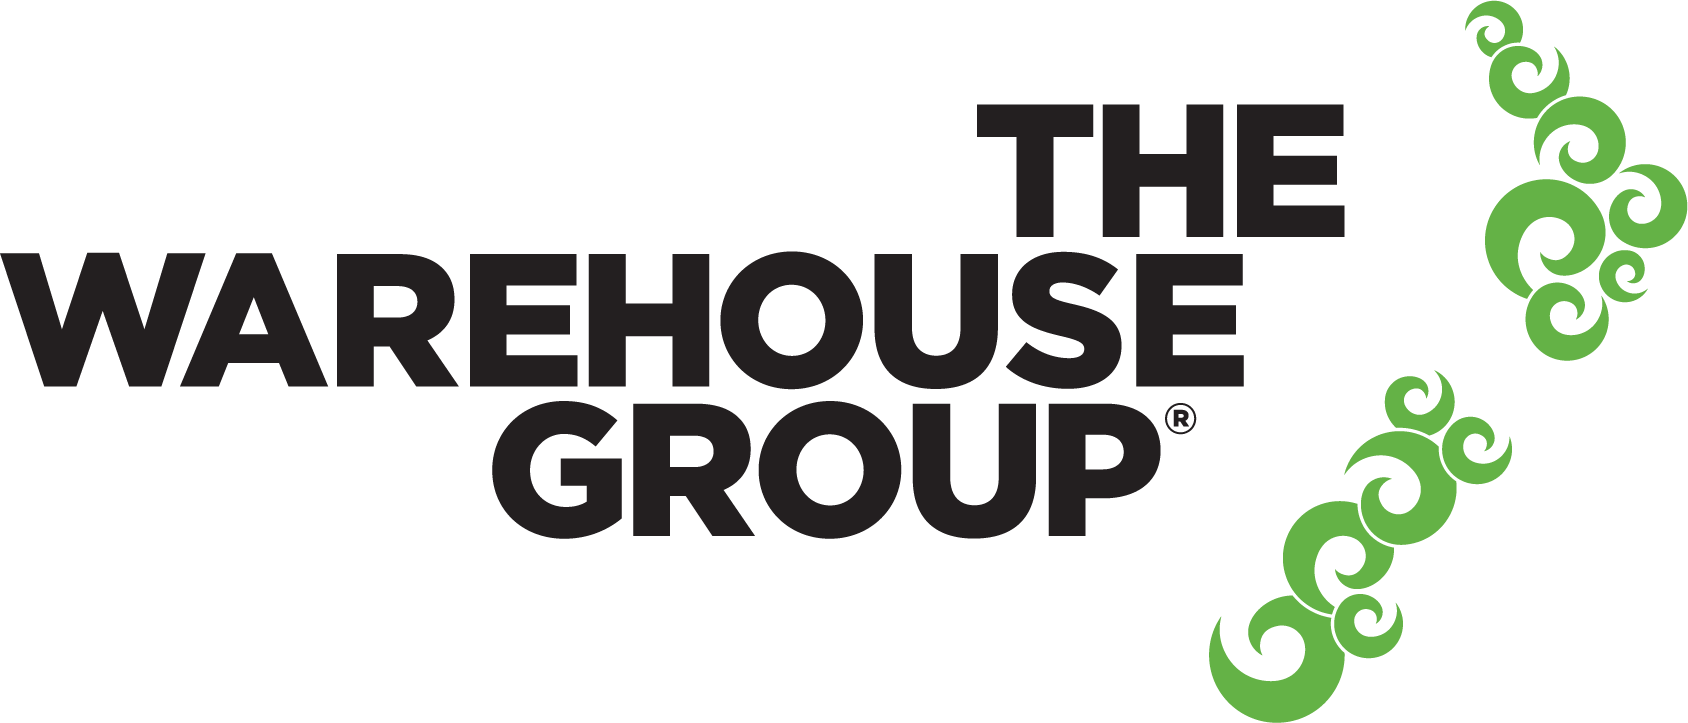 3X Logo - The Warehouse Group :: Logos